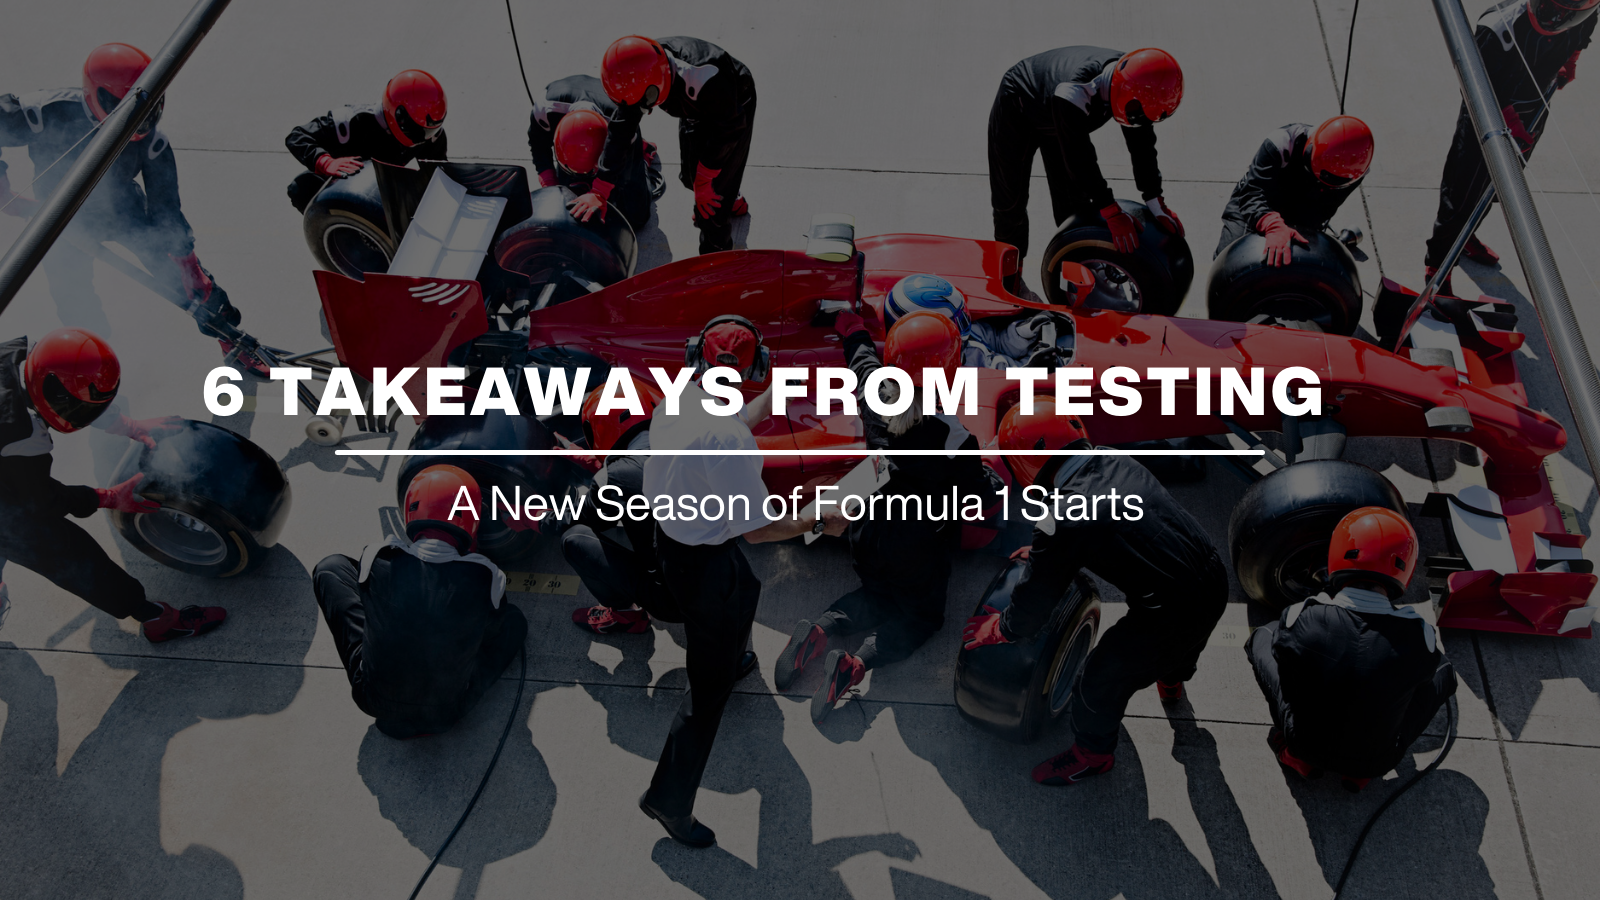 5 takeaways from formula 1 testing season 